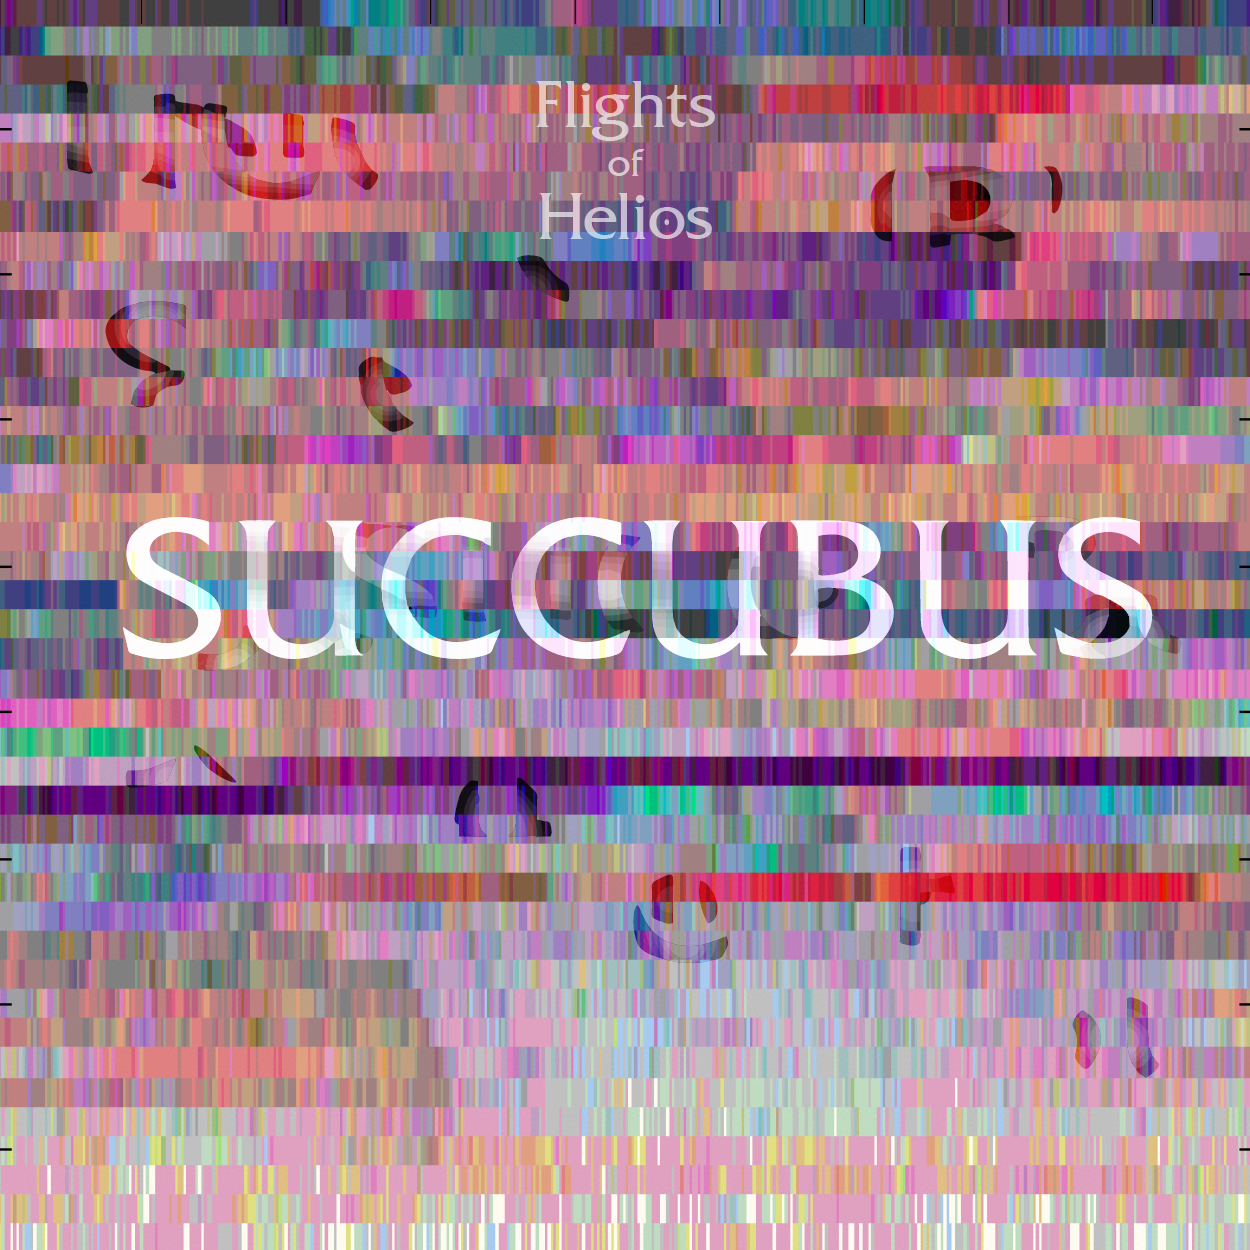 PREMIERE STREAM: Flights of the Helios - SUCCUBUS